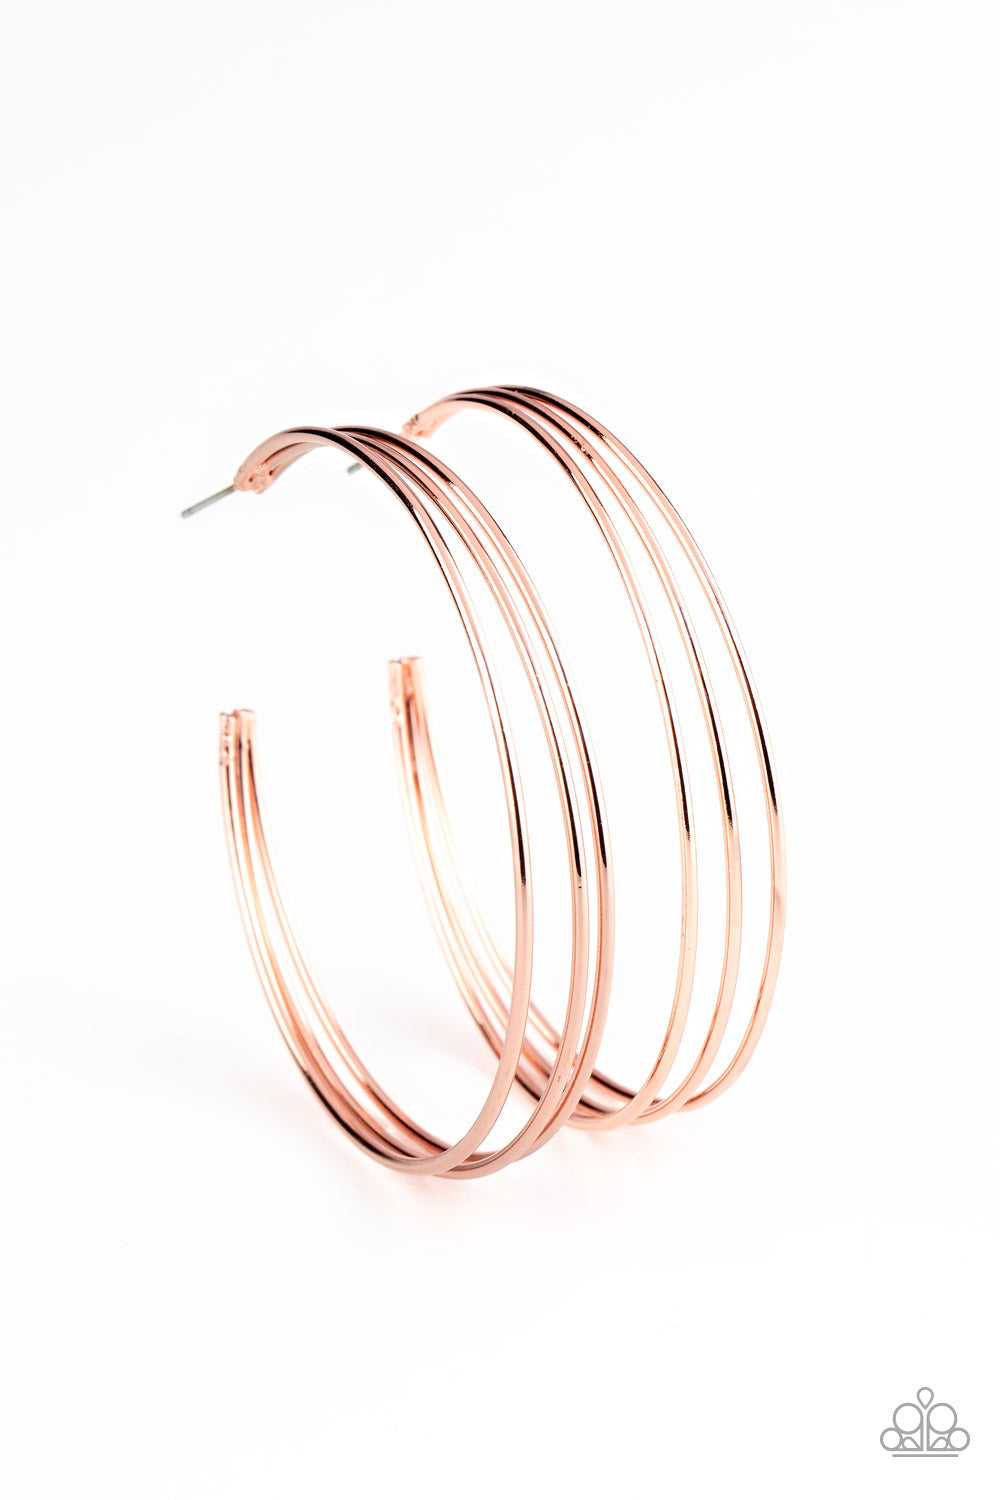 Rimmed Radiance Earrings - Copper